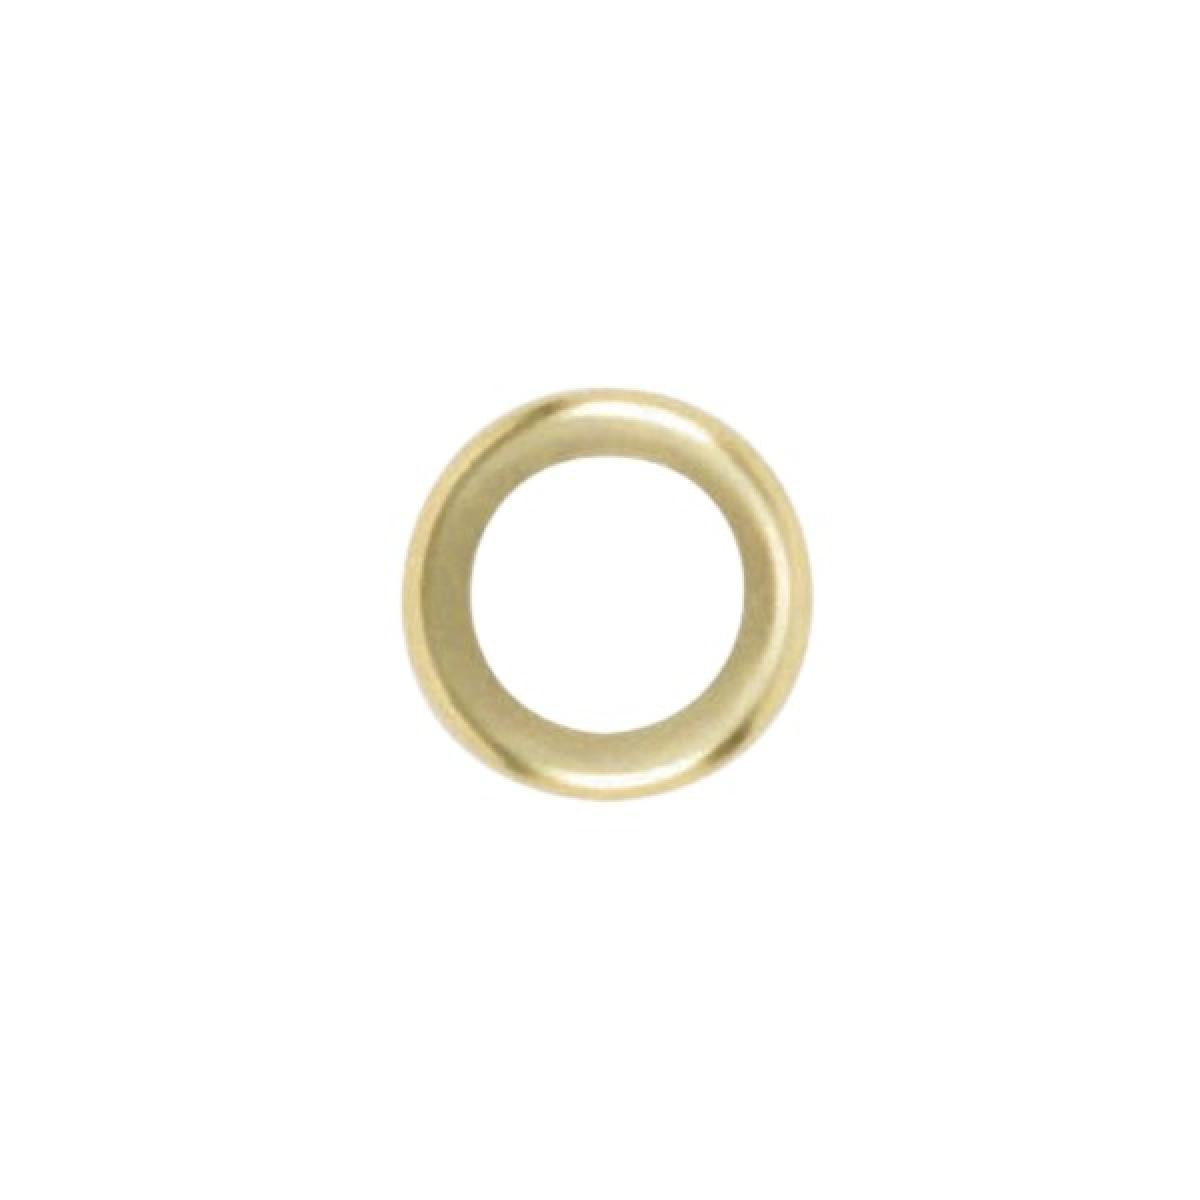 Satco 90-1656 Steel Check Ring Curled Edge 1/4 IP Slip Brass Plated Finish 2" Diameter